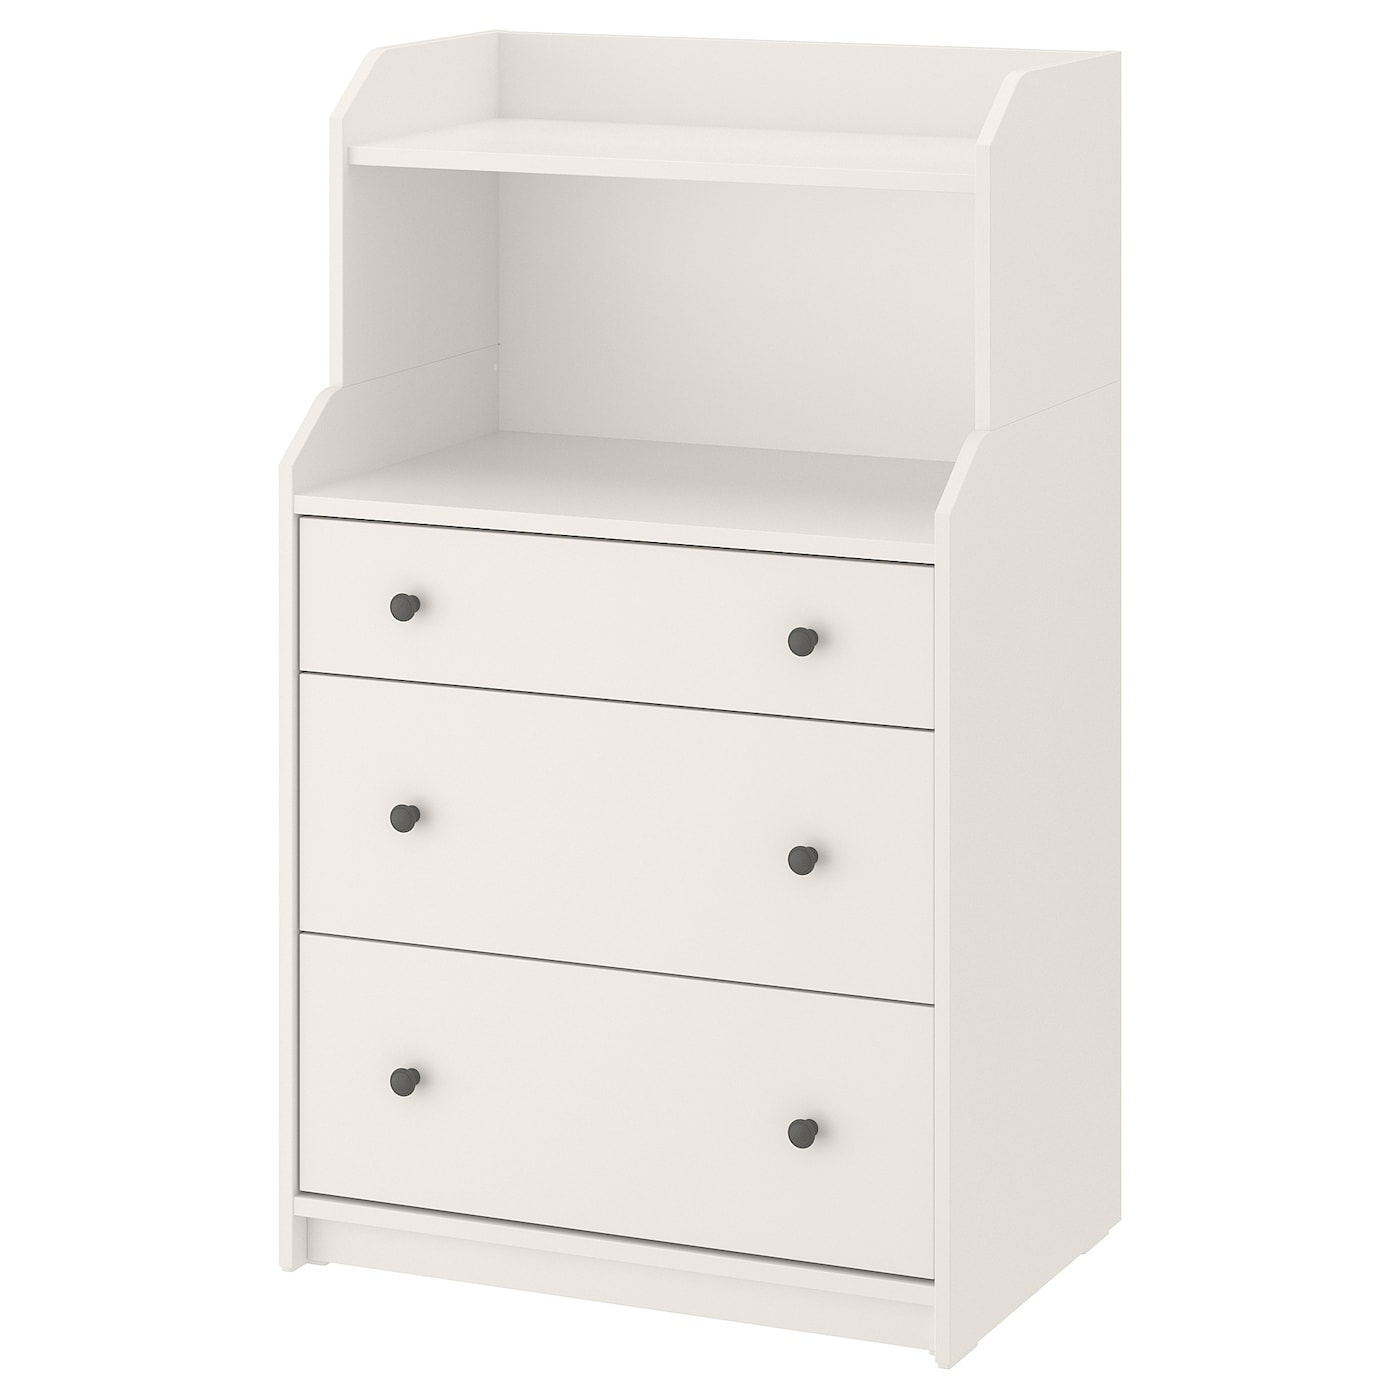 HAUGA chest of 3 drawers with shelf white - IKEA